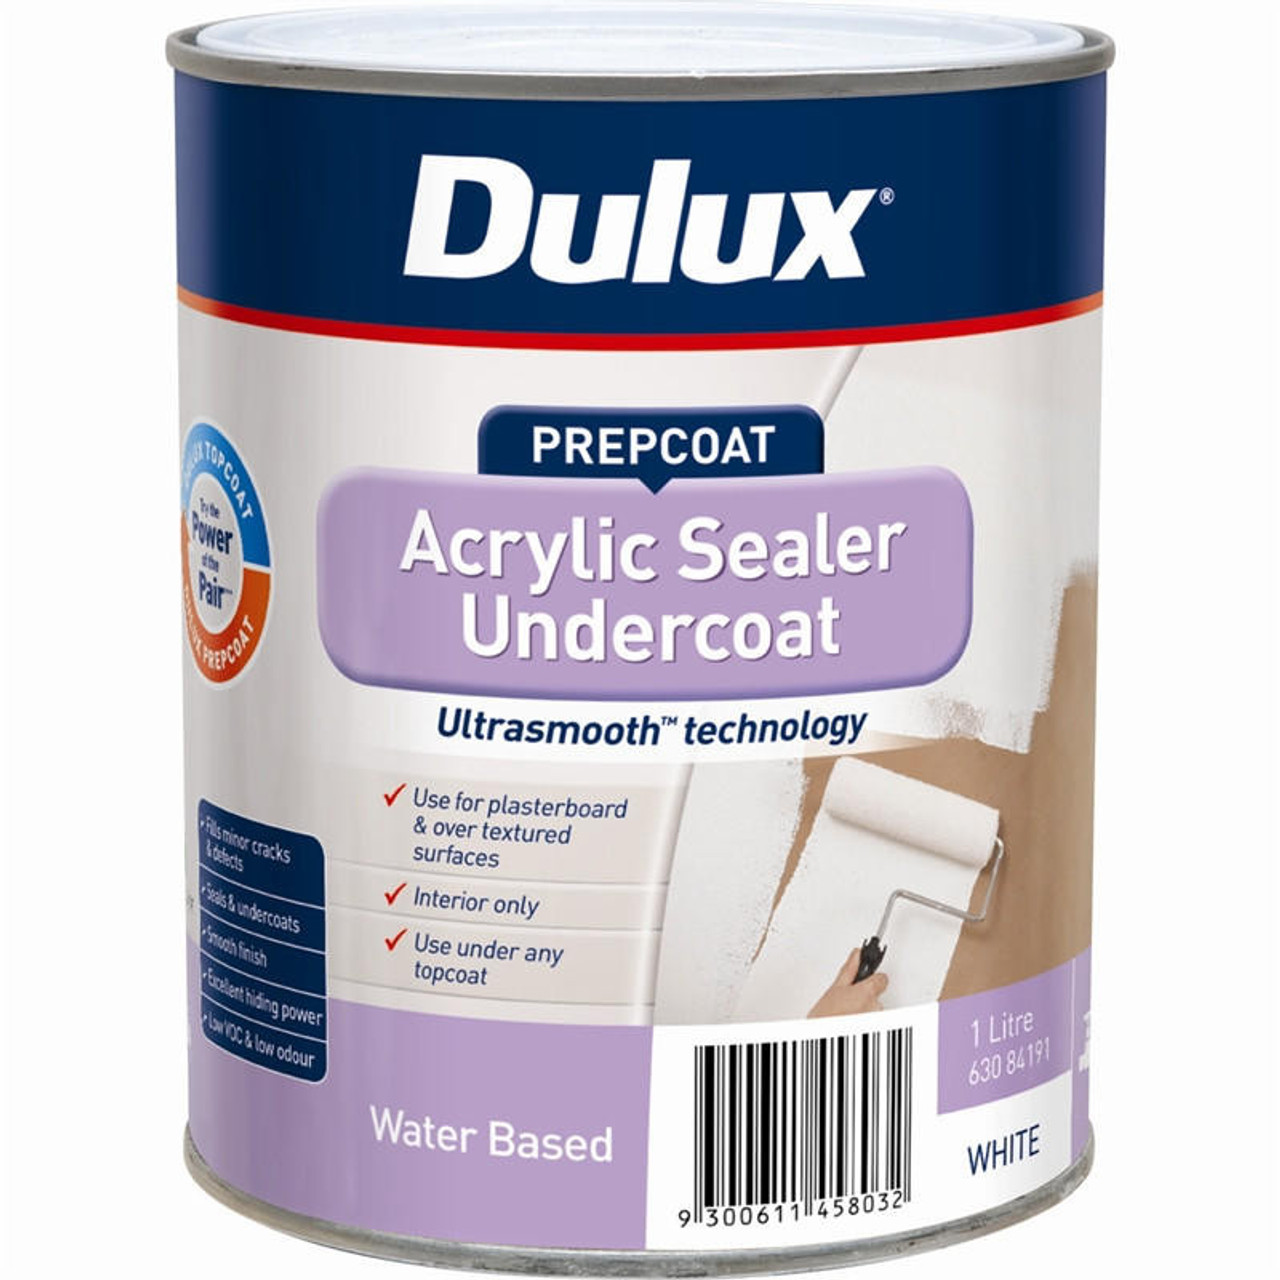 Dulux Prepcoat 1L Acrylic Sealer Undercoat